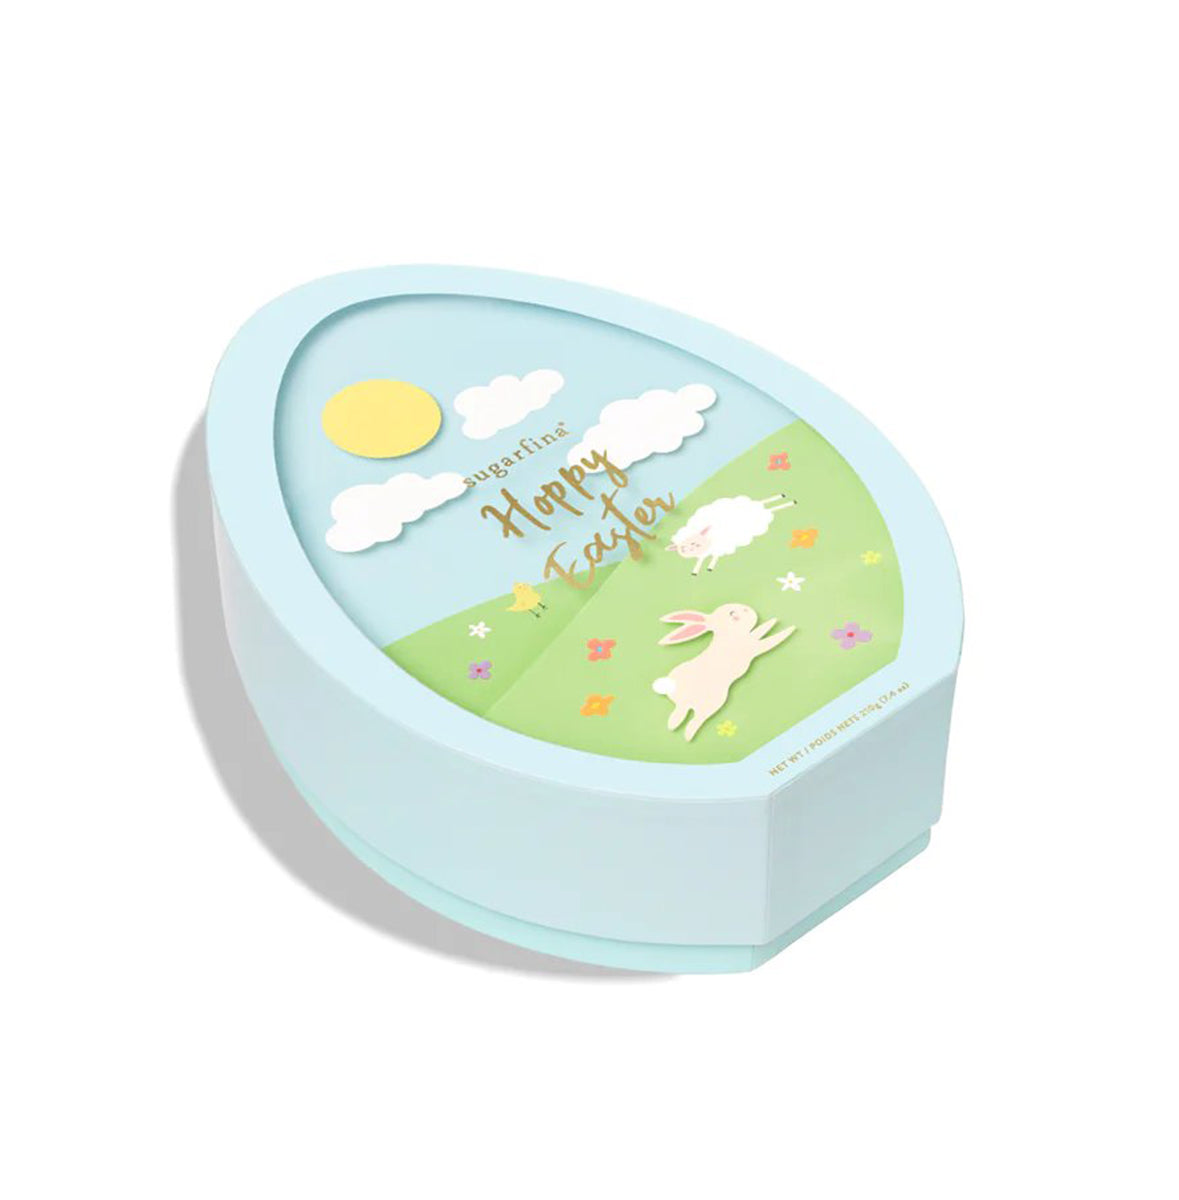 Sugerfina Hoppy Easter 3-Piece Candy Bento Box